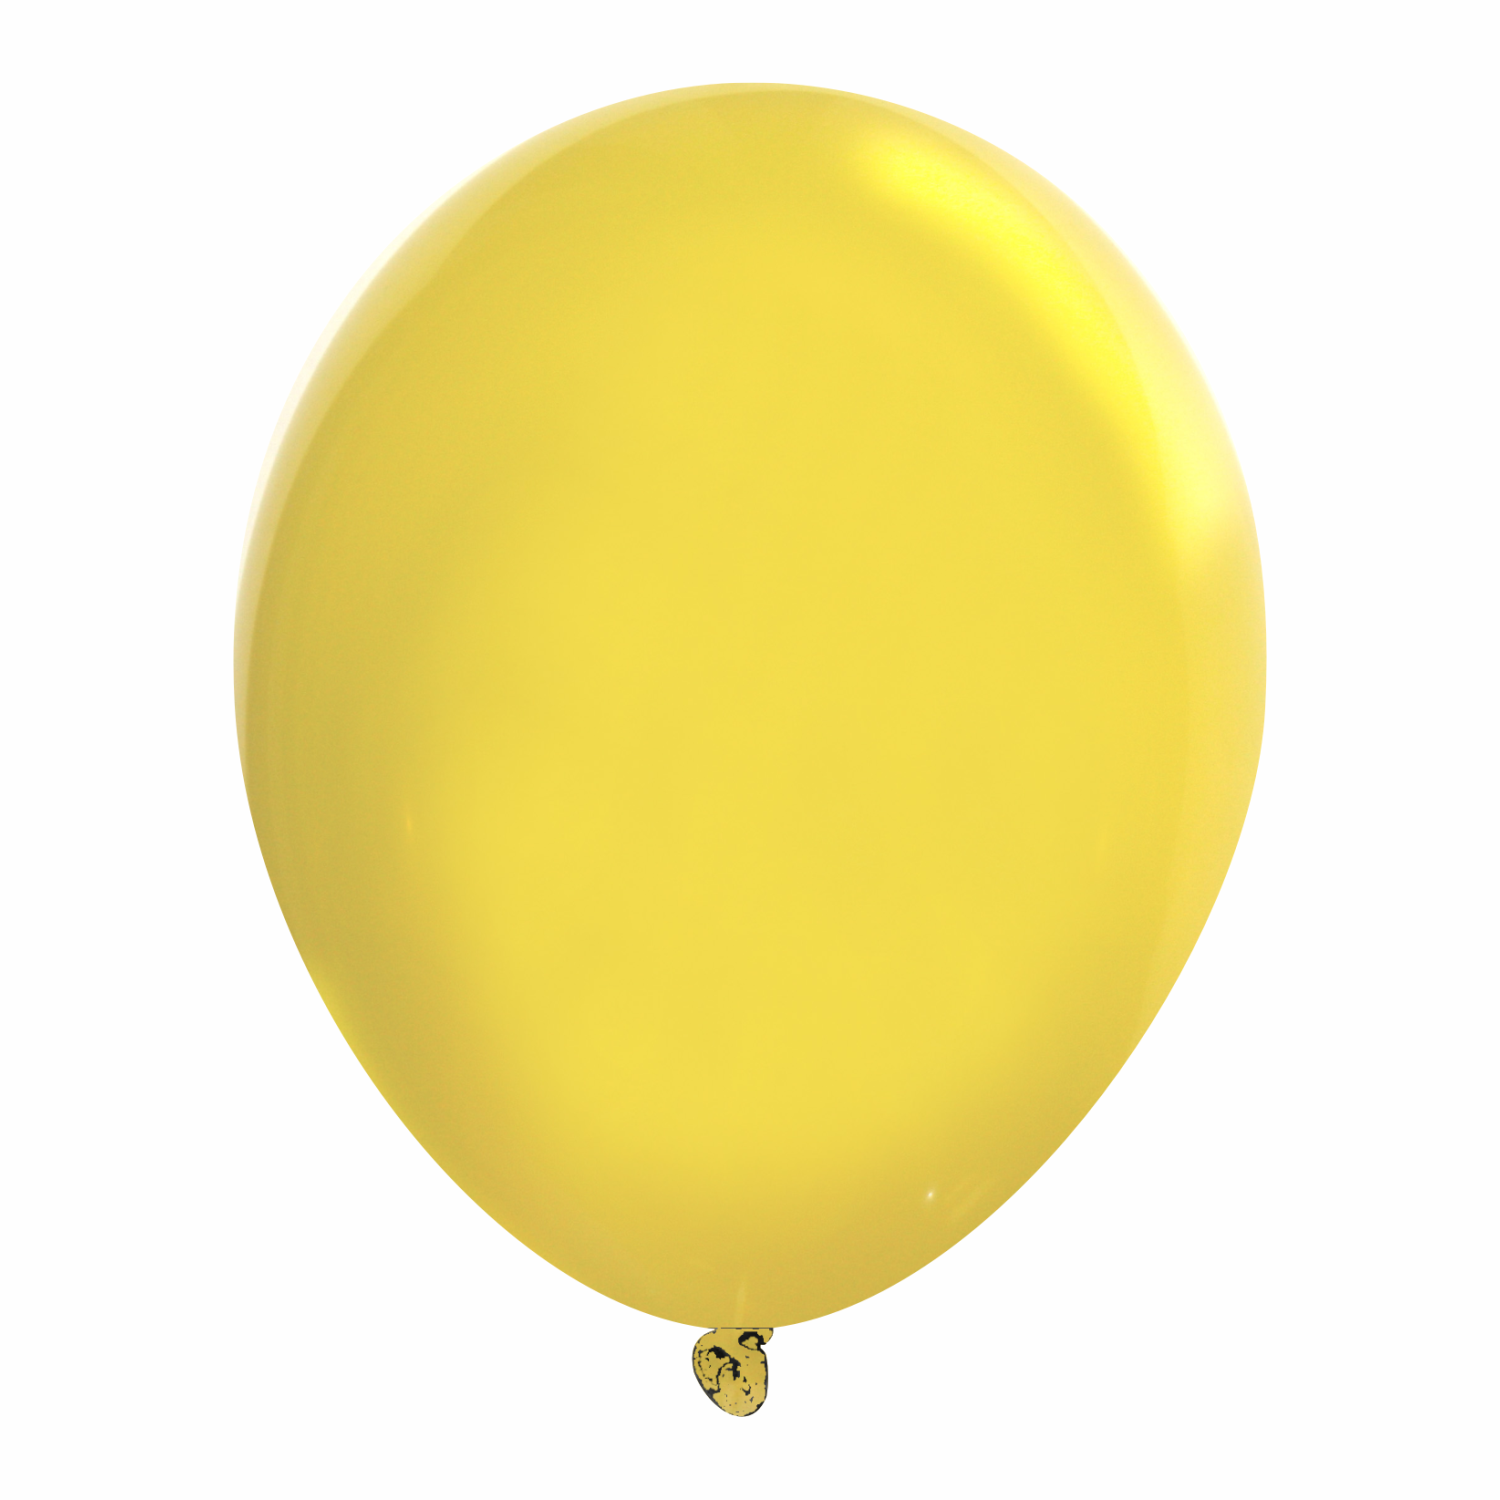 http://images.officebrain.com/migration-api-hidden-new/web/images/626/9crye-lemon-yellow.png